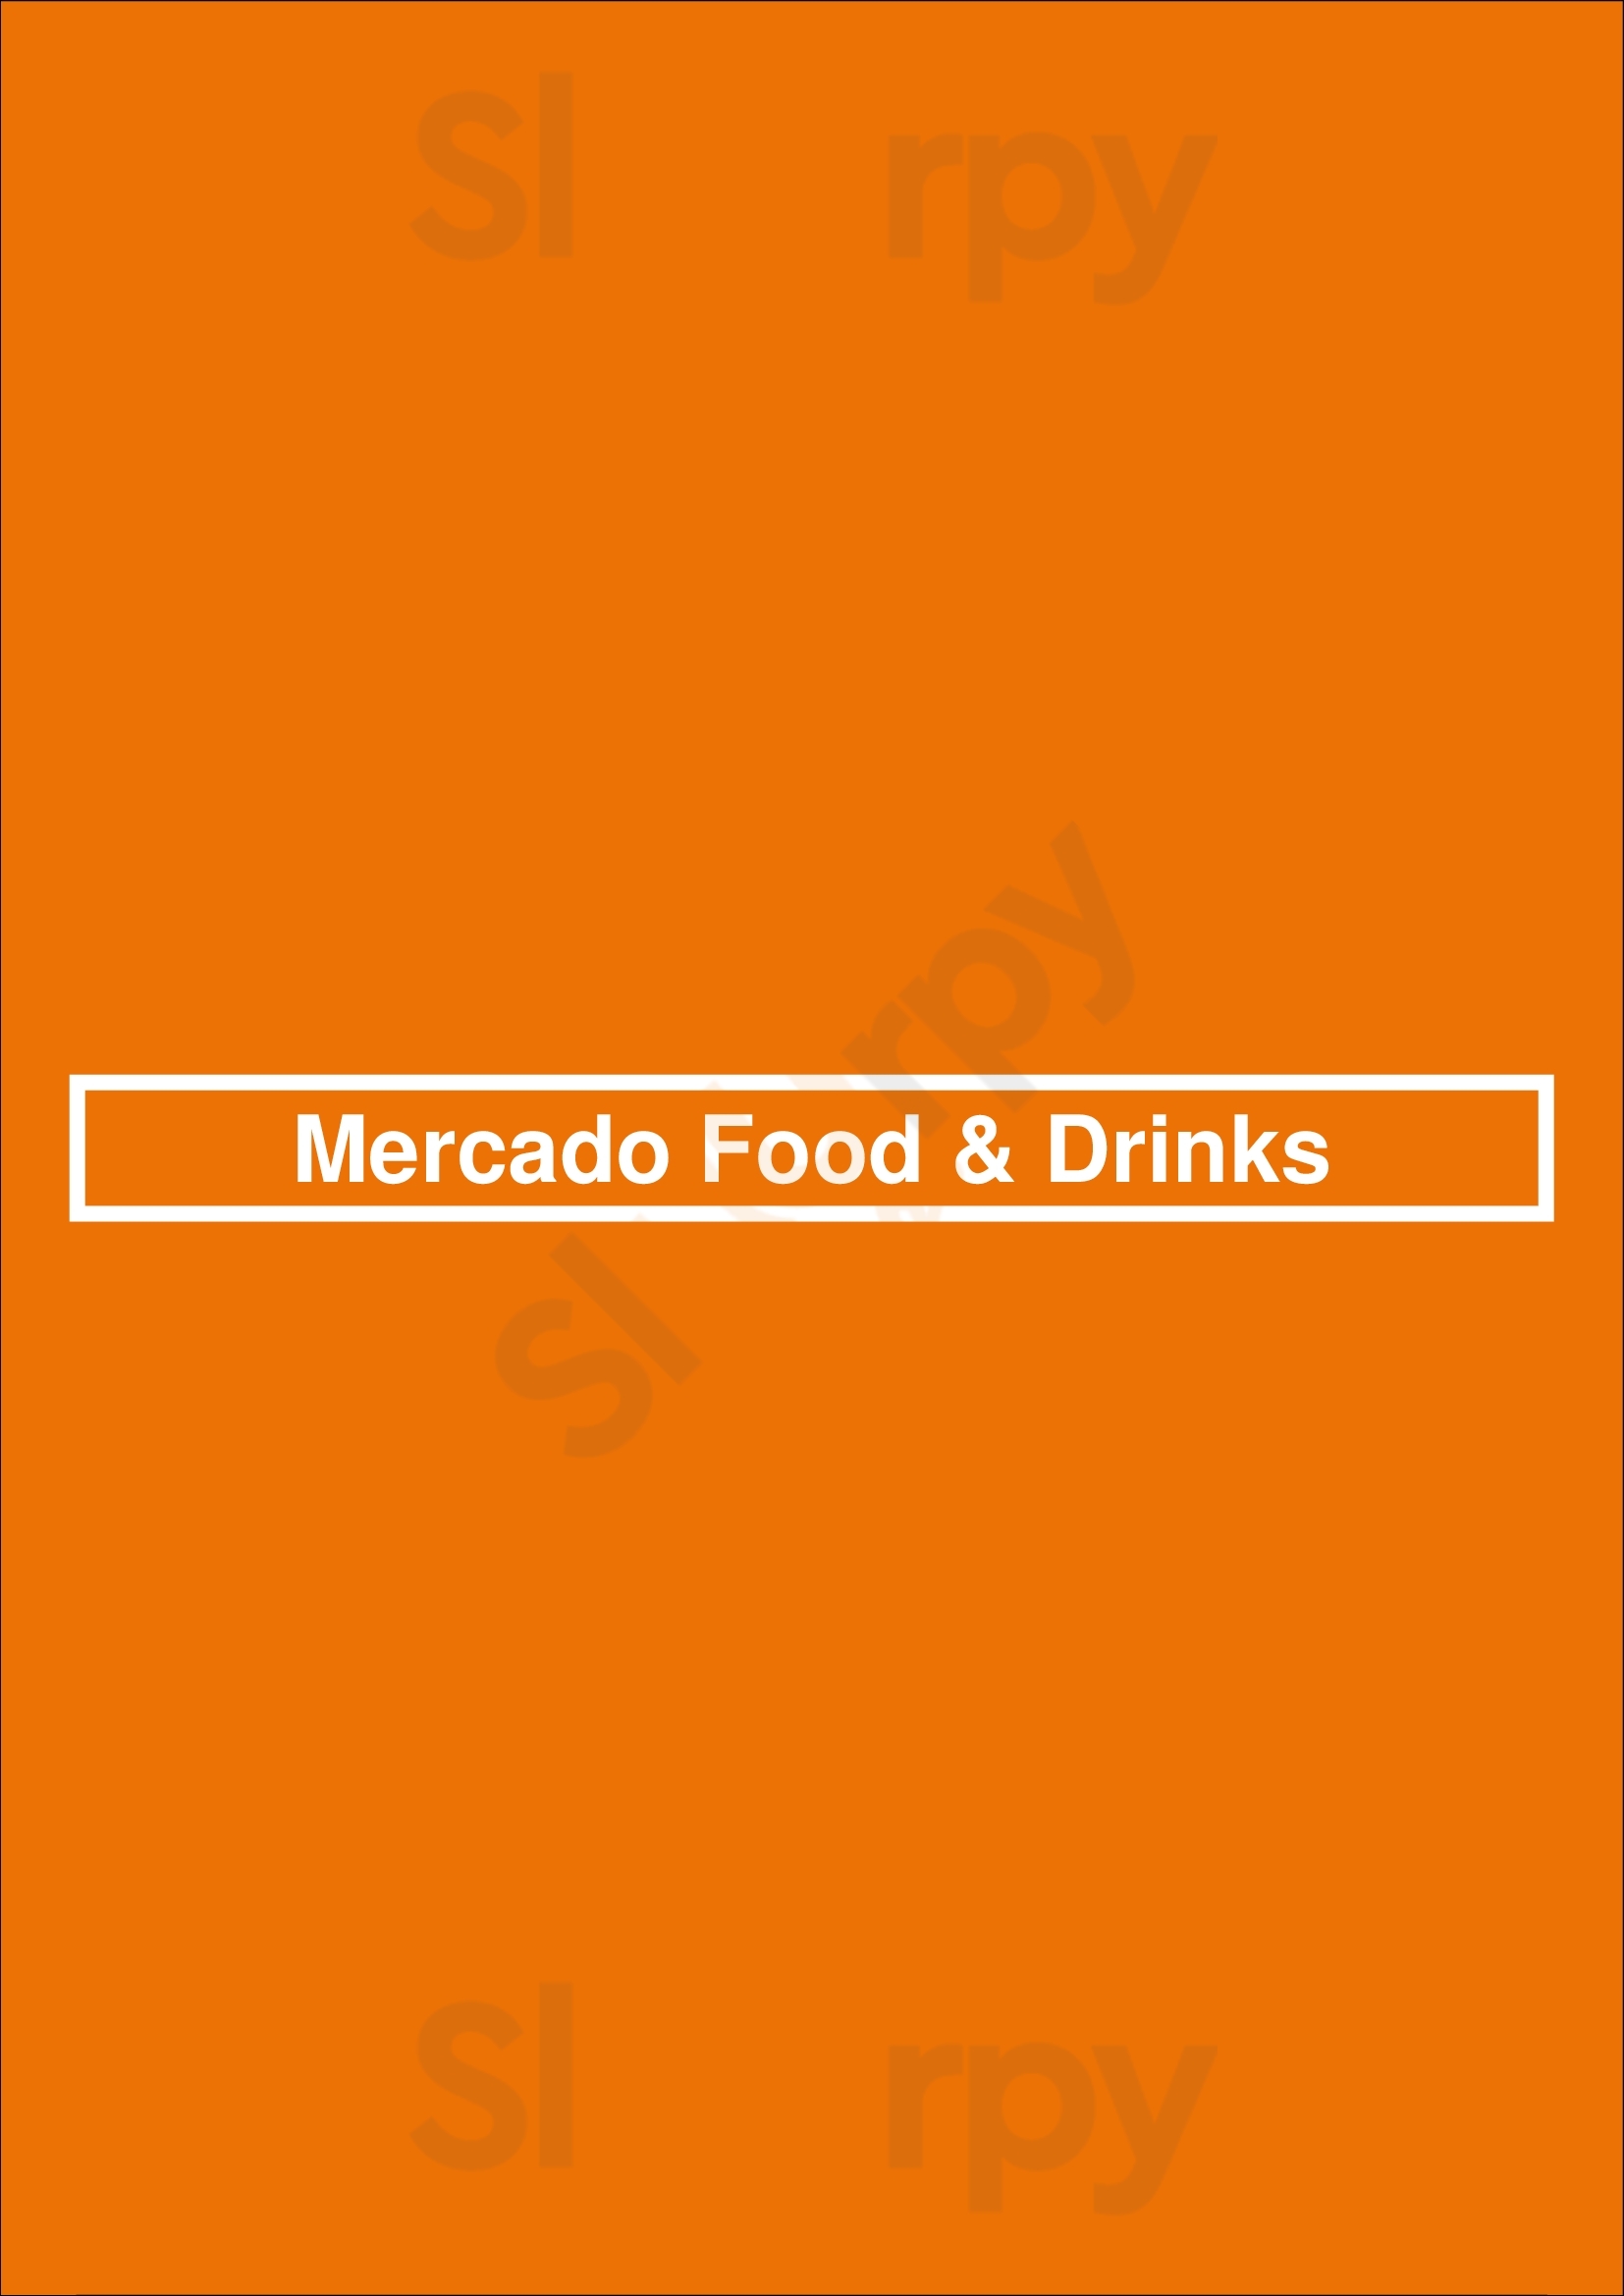 Mercado Food & Drinks Matosinhos Menu - 1